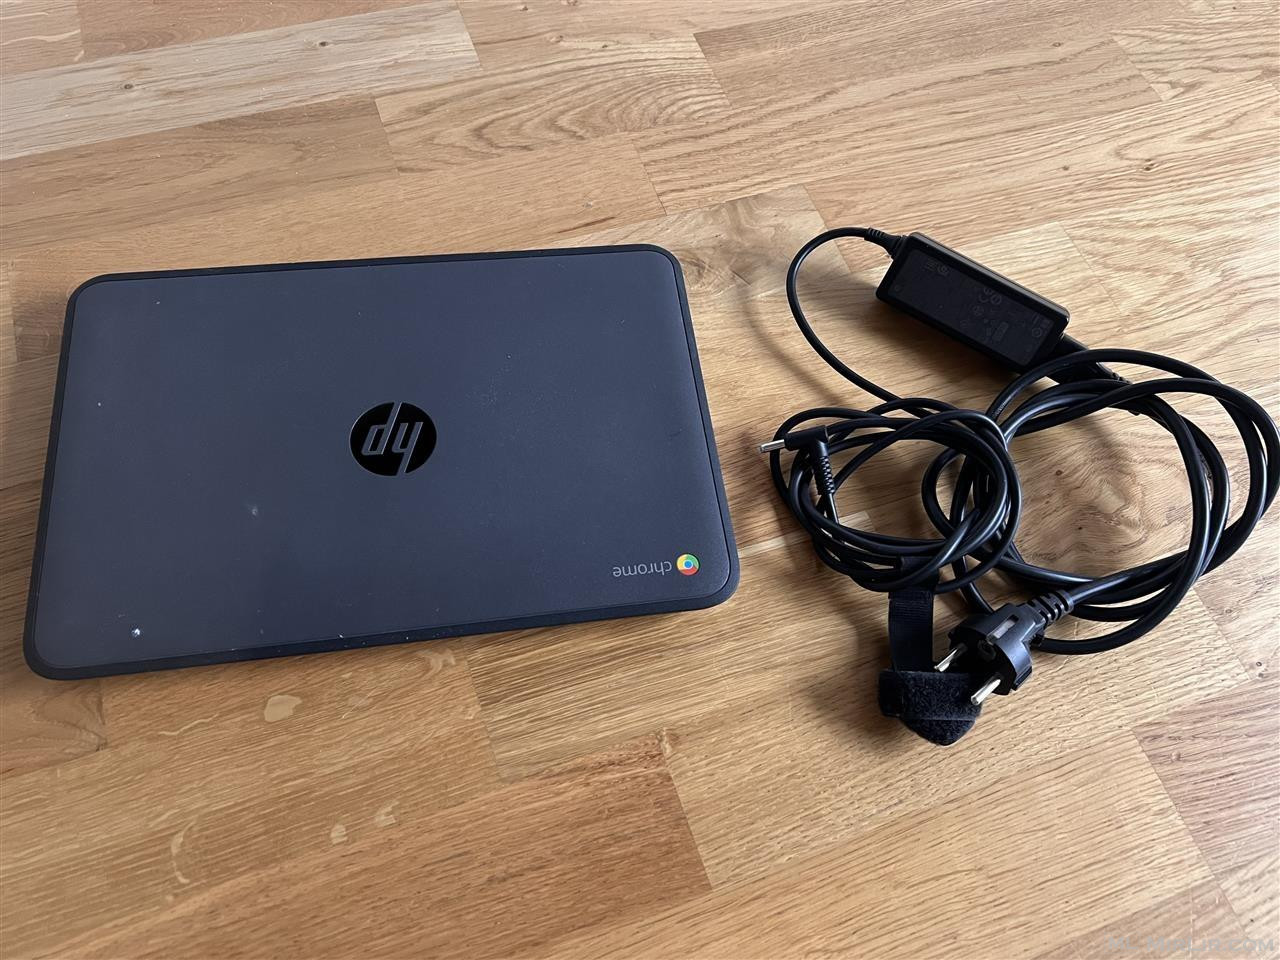 HP Chromebook 11 G4 ne gjendje shum te mir funksionale